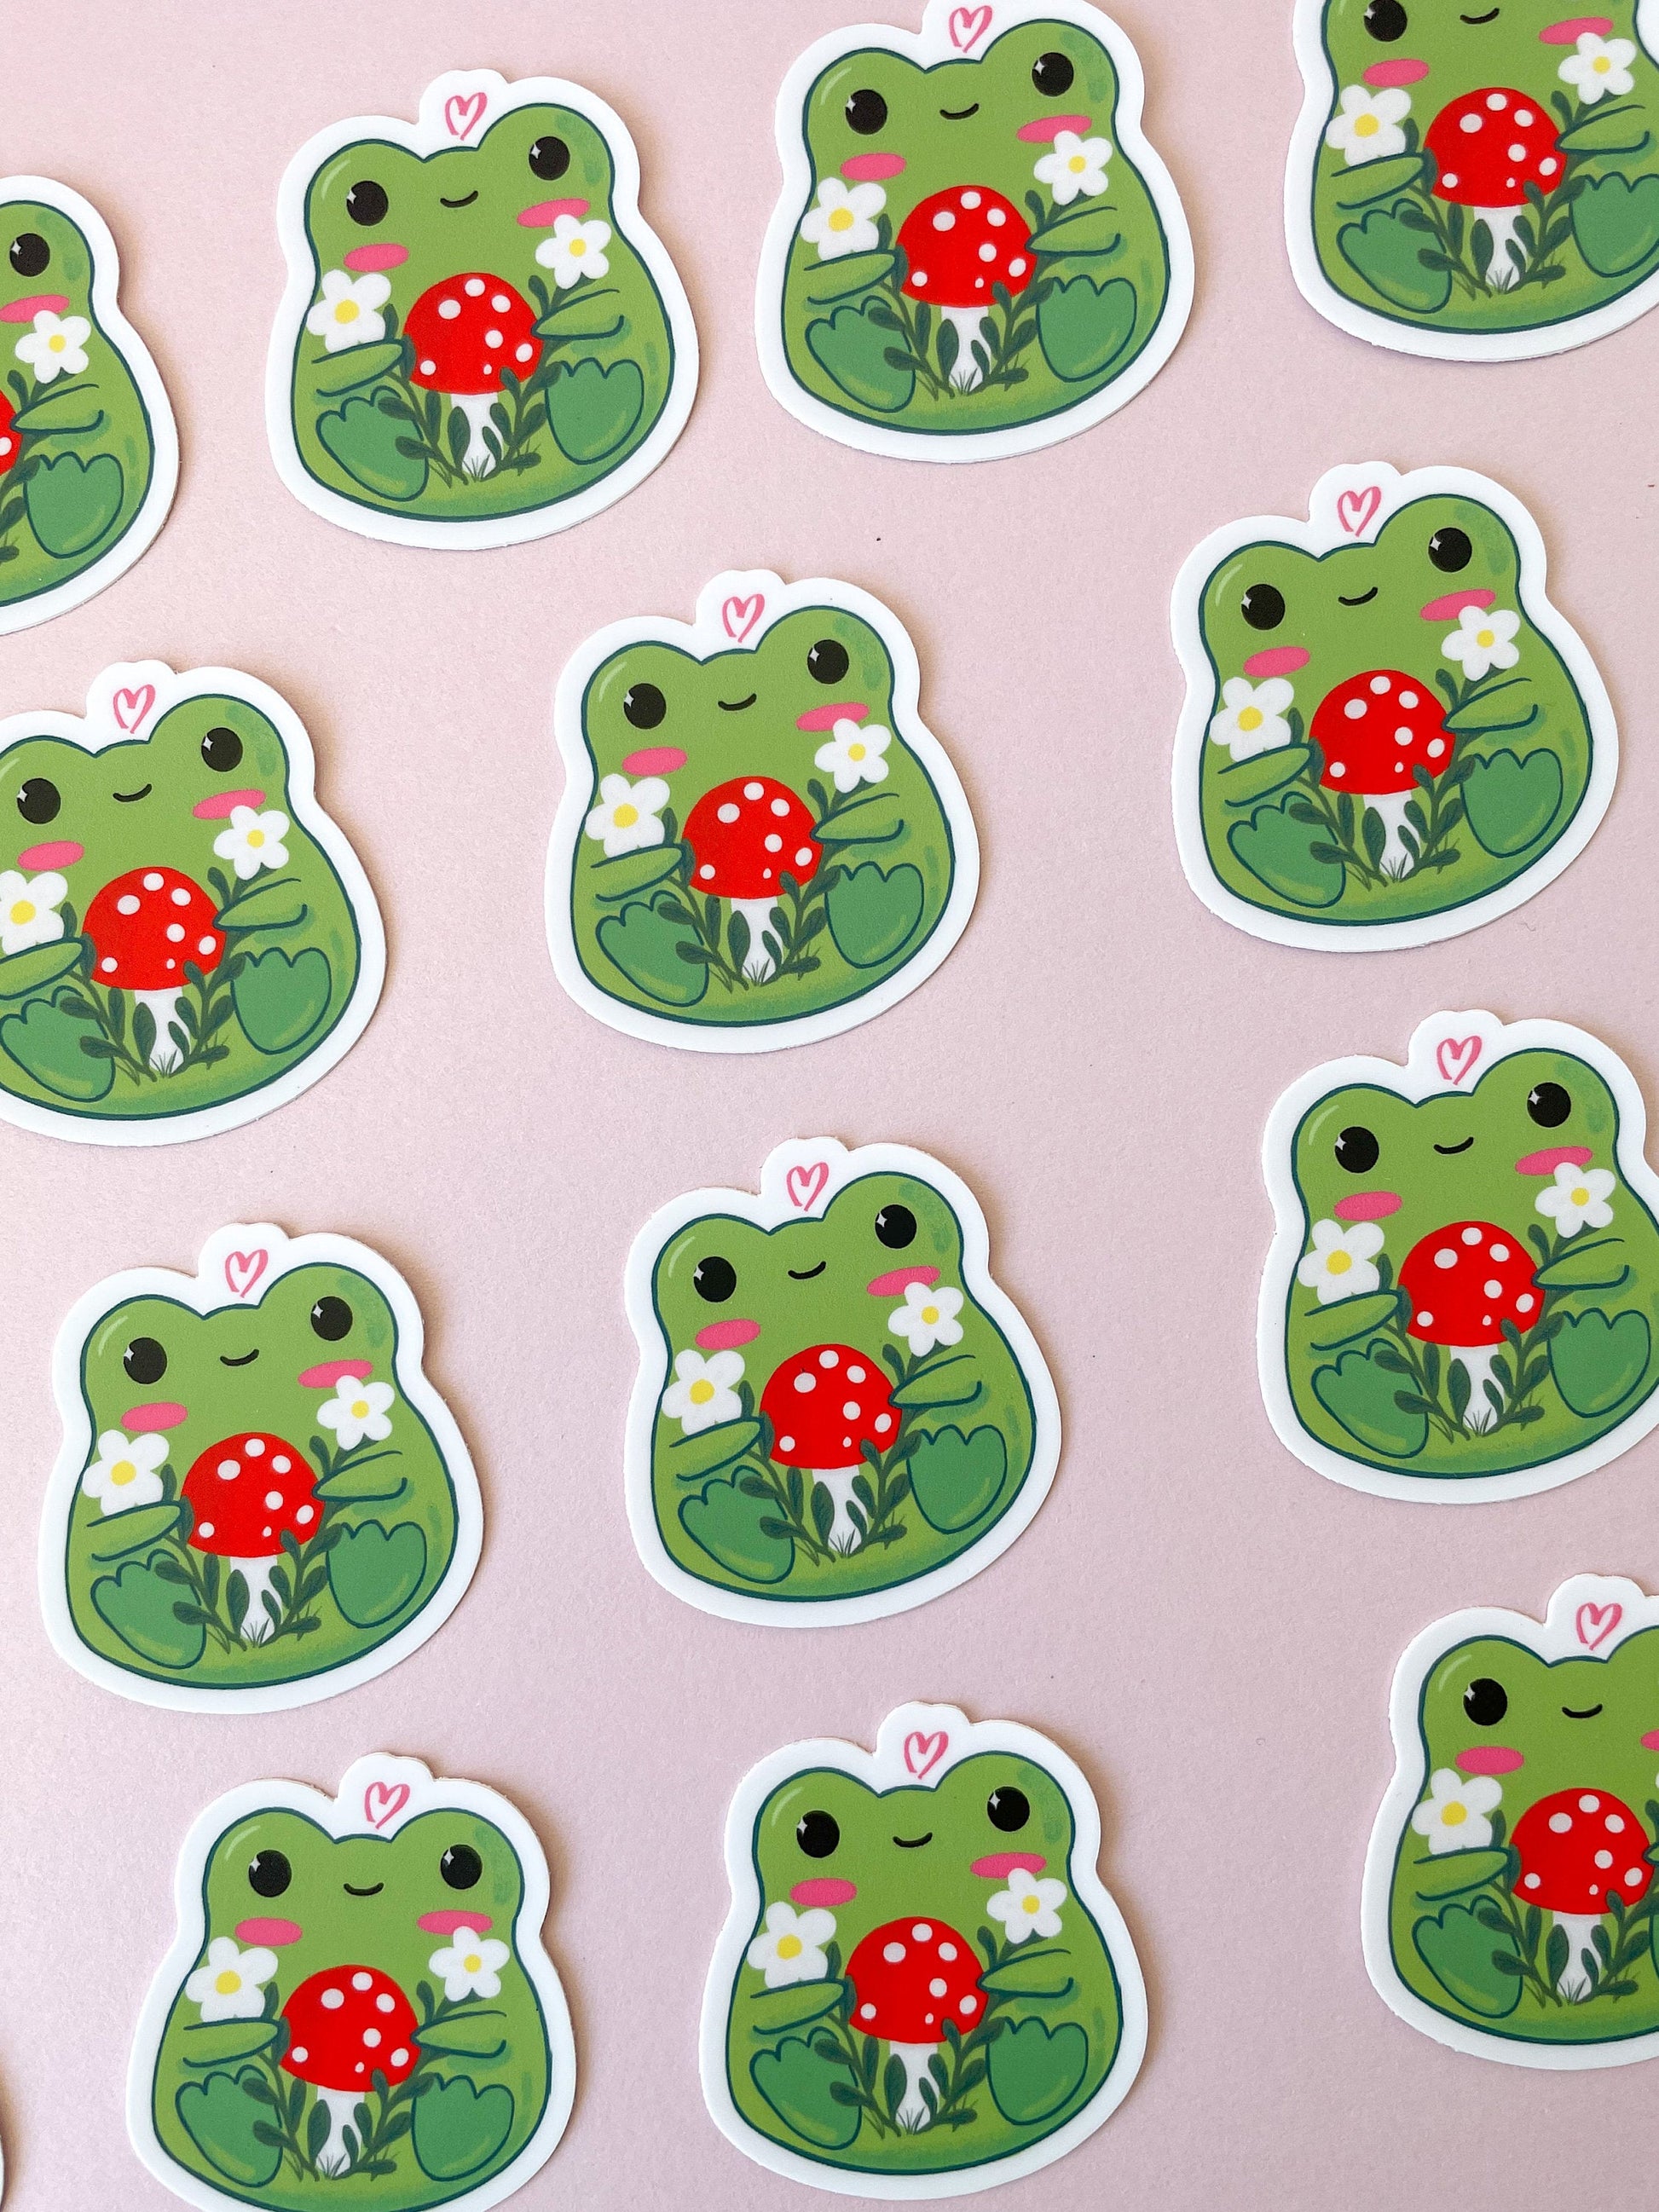 Froggy with Mushroom Sticker//Digital Art//Stickers//Illustration//Home decor//kawaii//Stationary//cottagecore//Waterproof Sticker